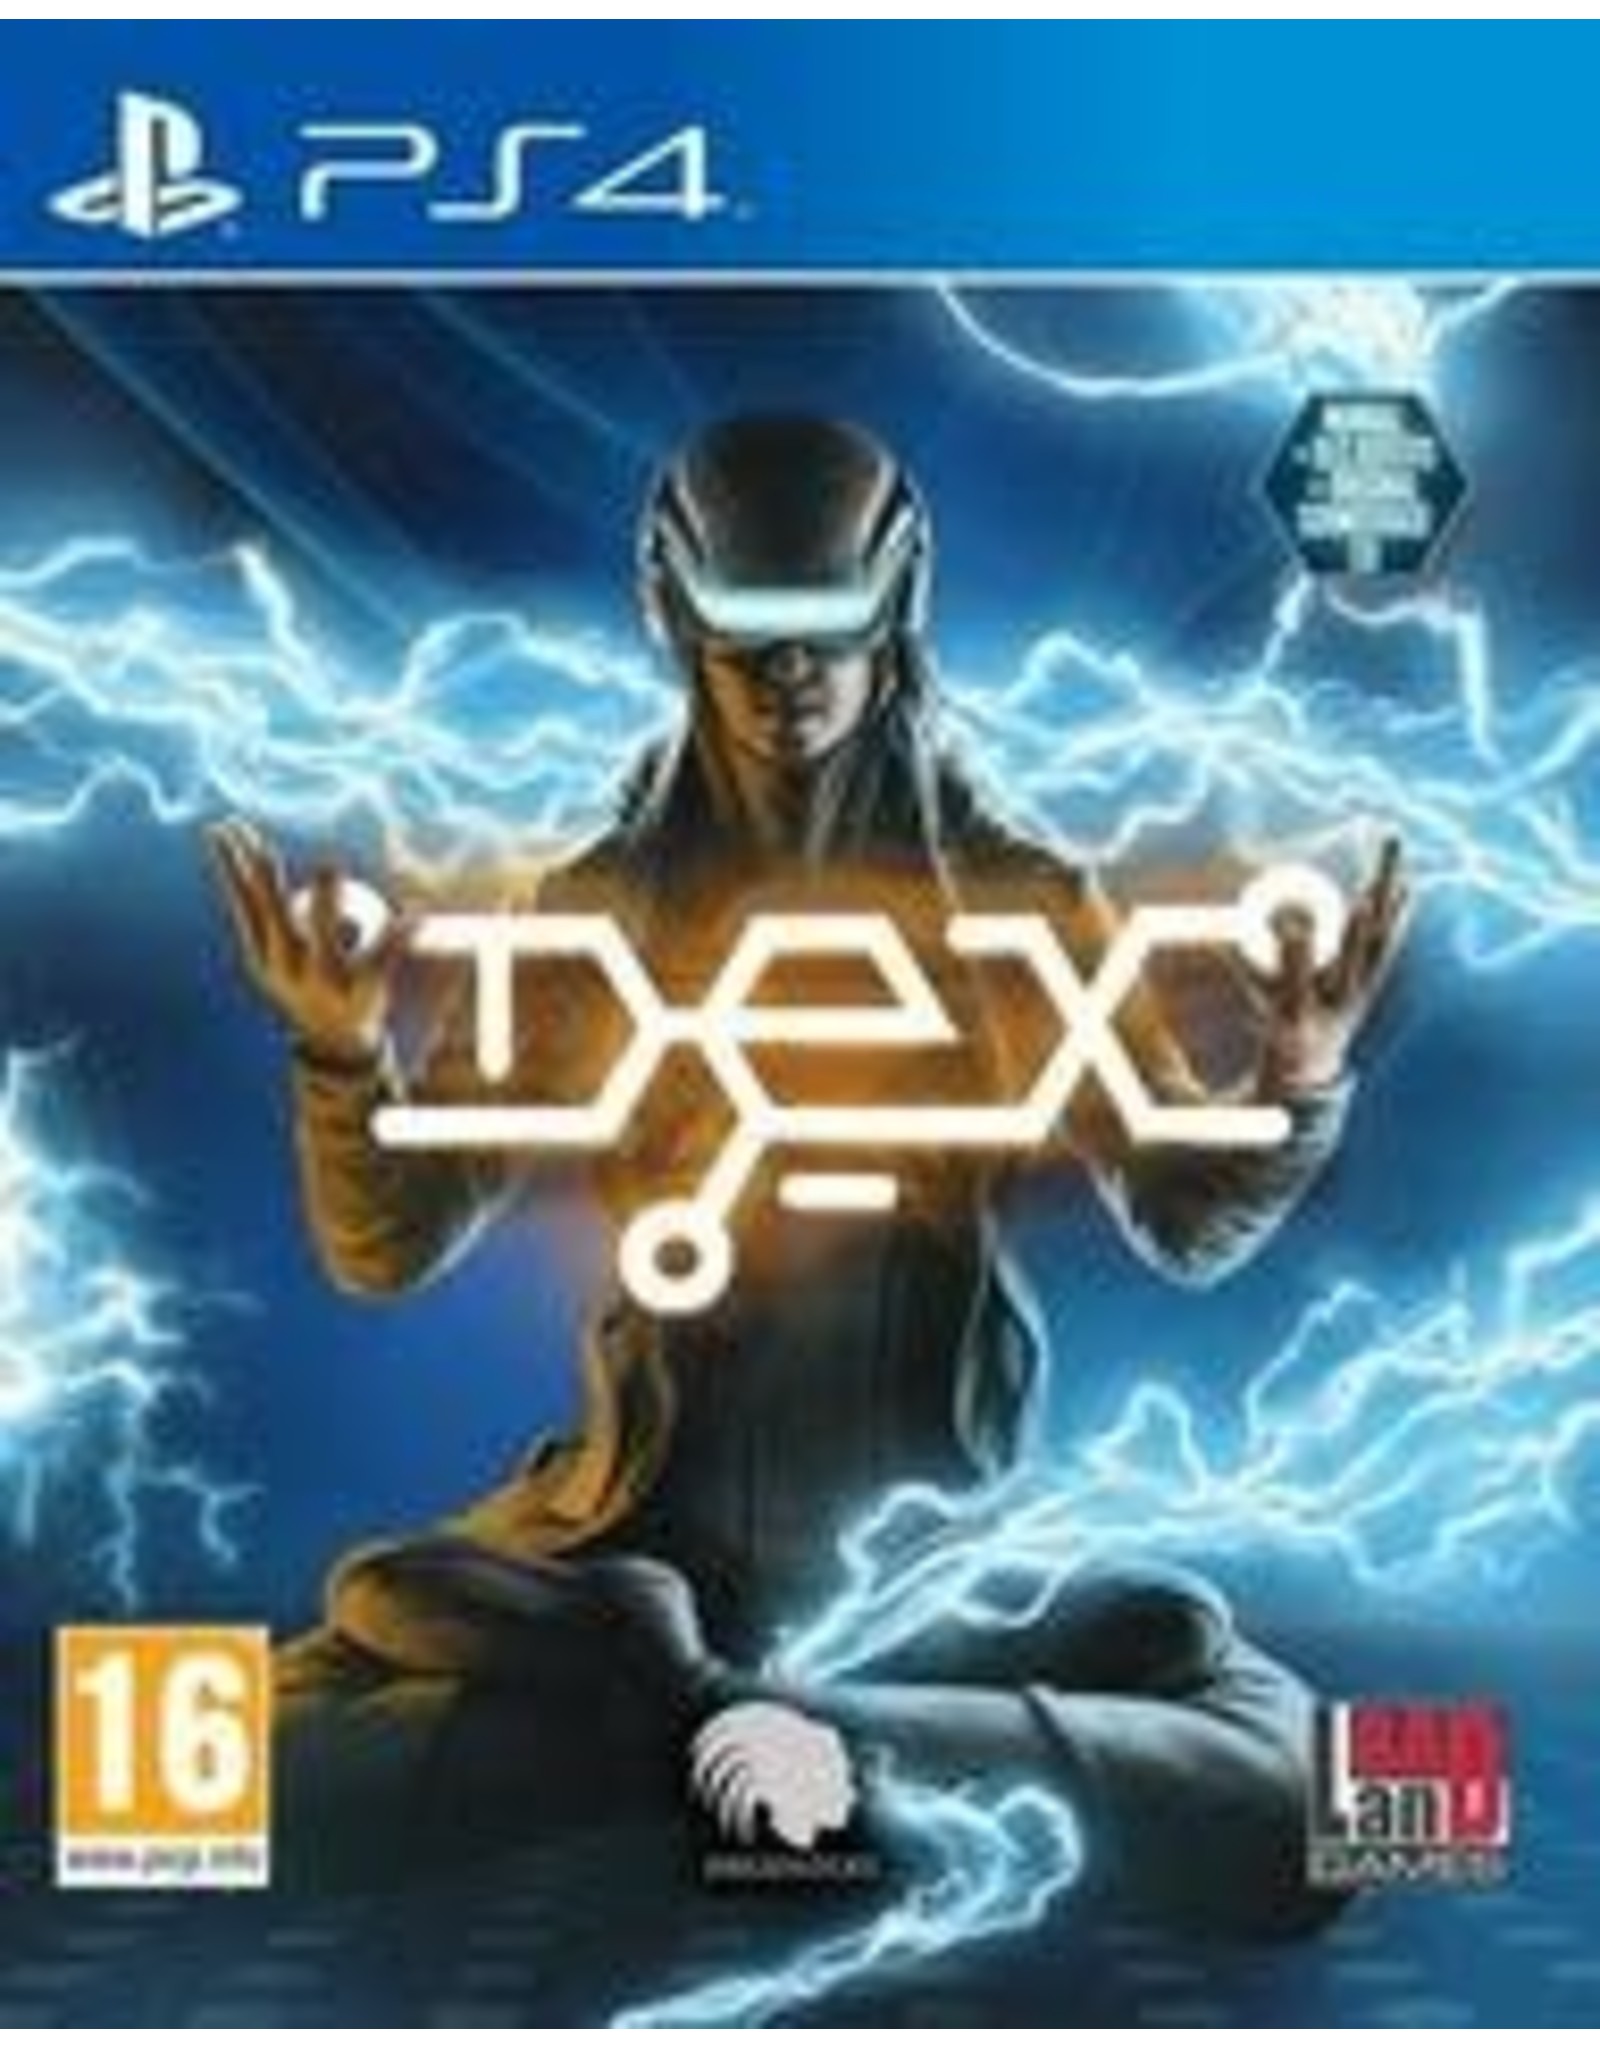 Playstation 4 Dex (UK Import, Brand New, Lightly Damaged Shrinkwrap)